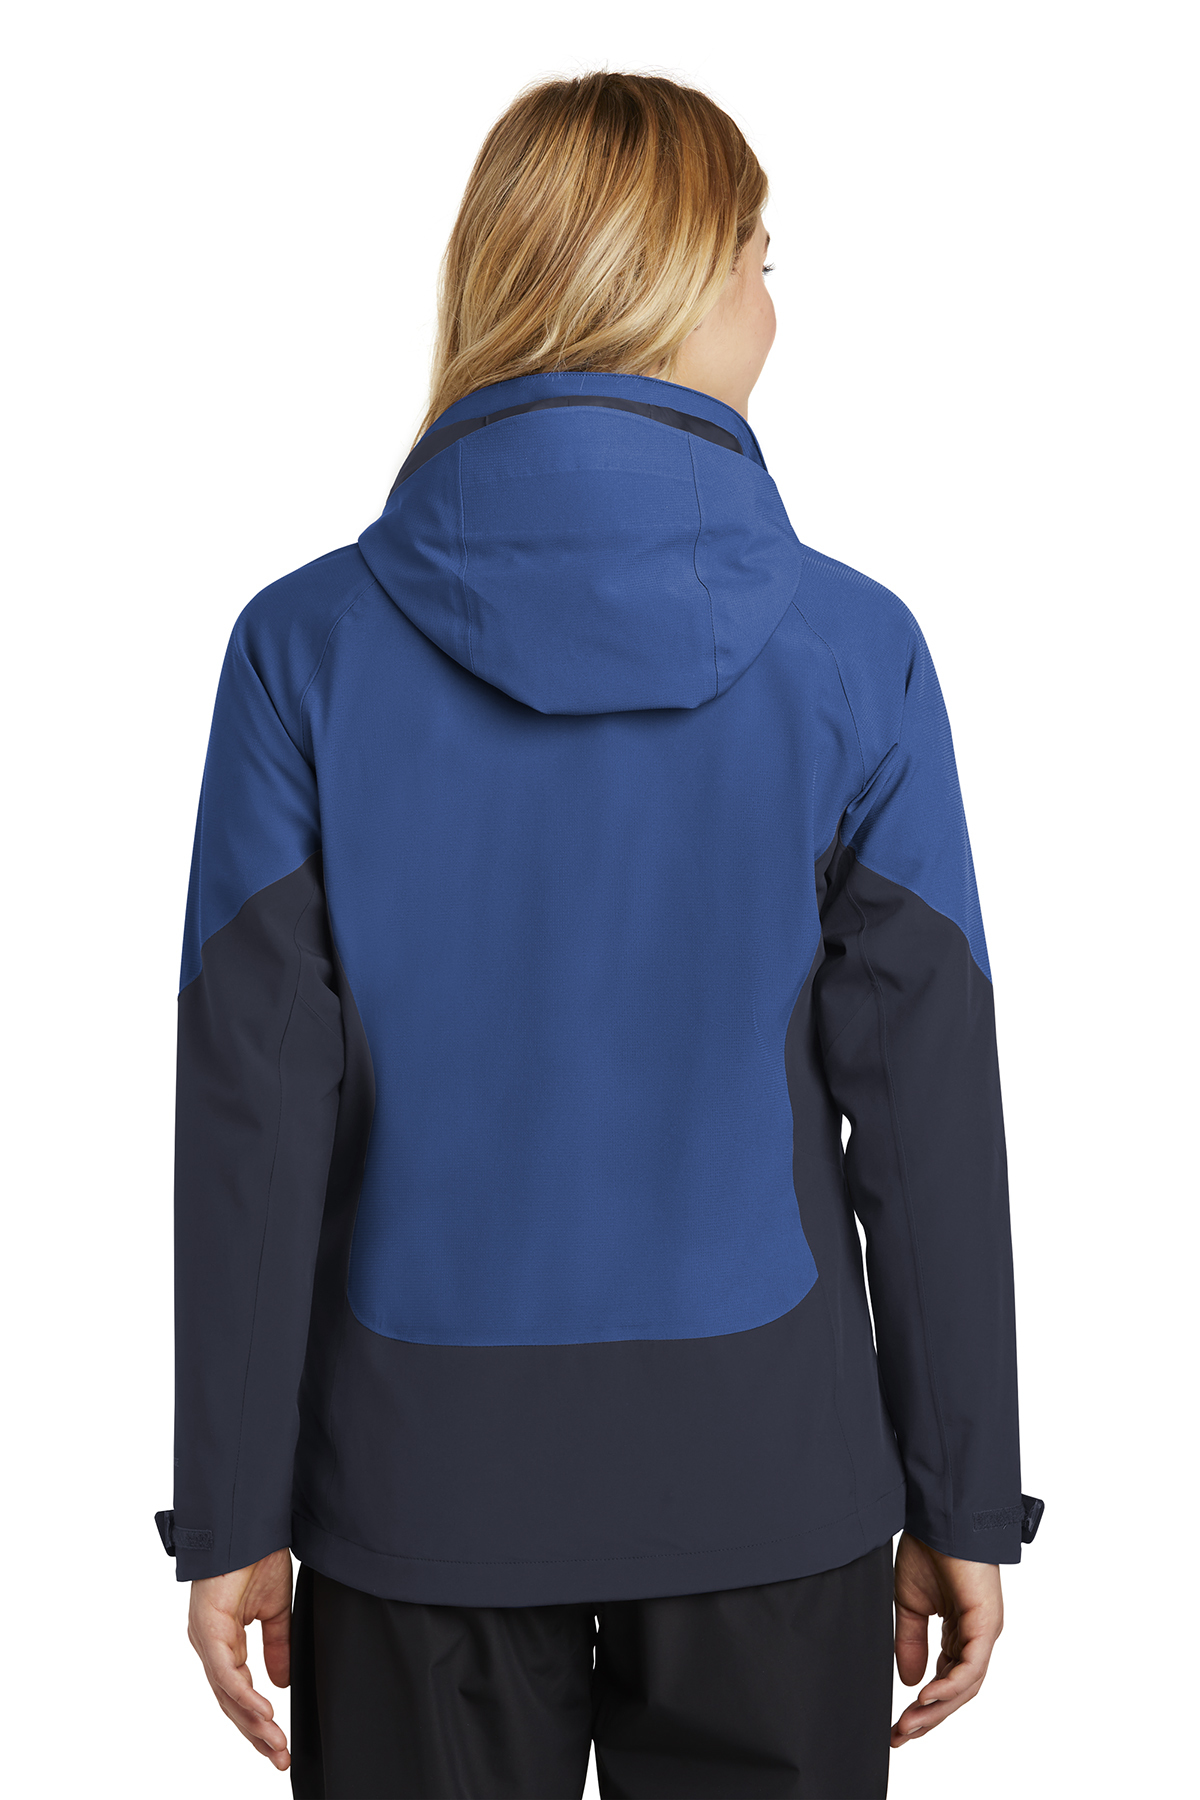 Eddie Bauer Ladies WeatherEdge Jacket | Product | Company Casuals